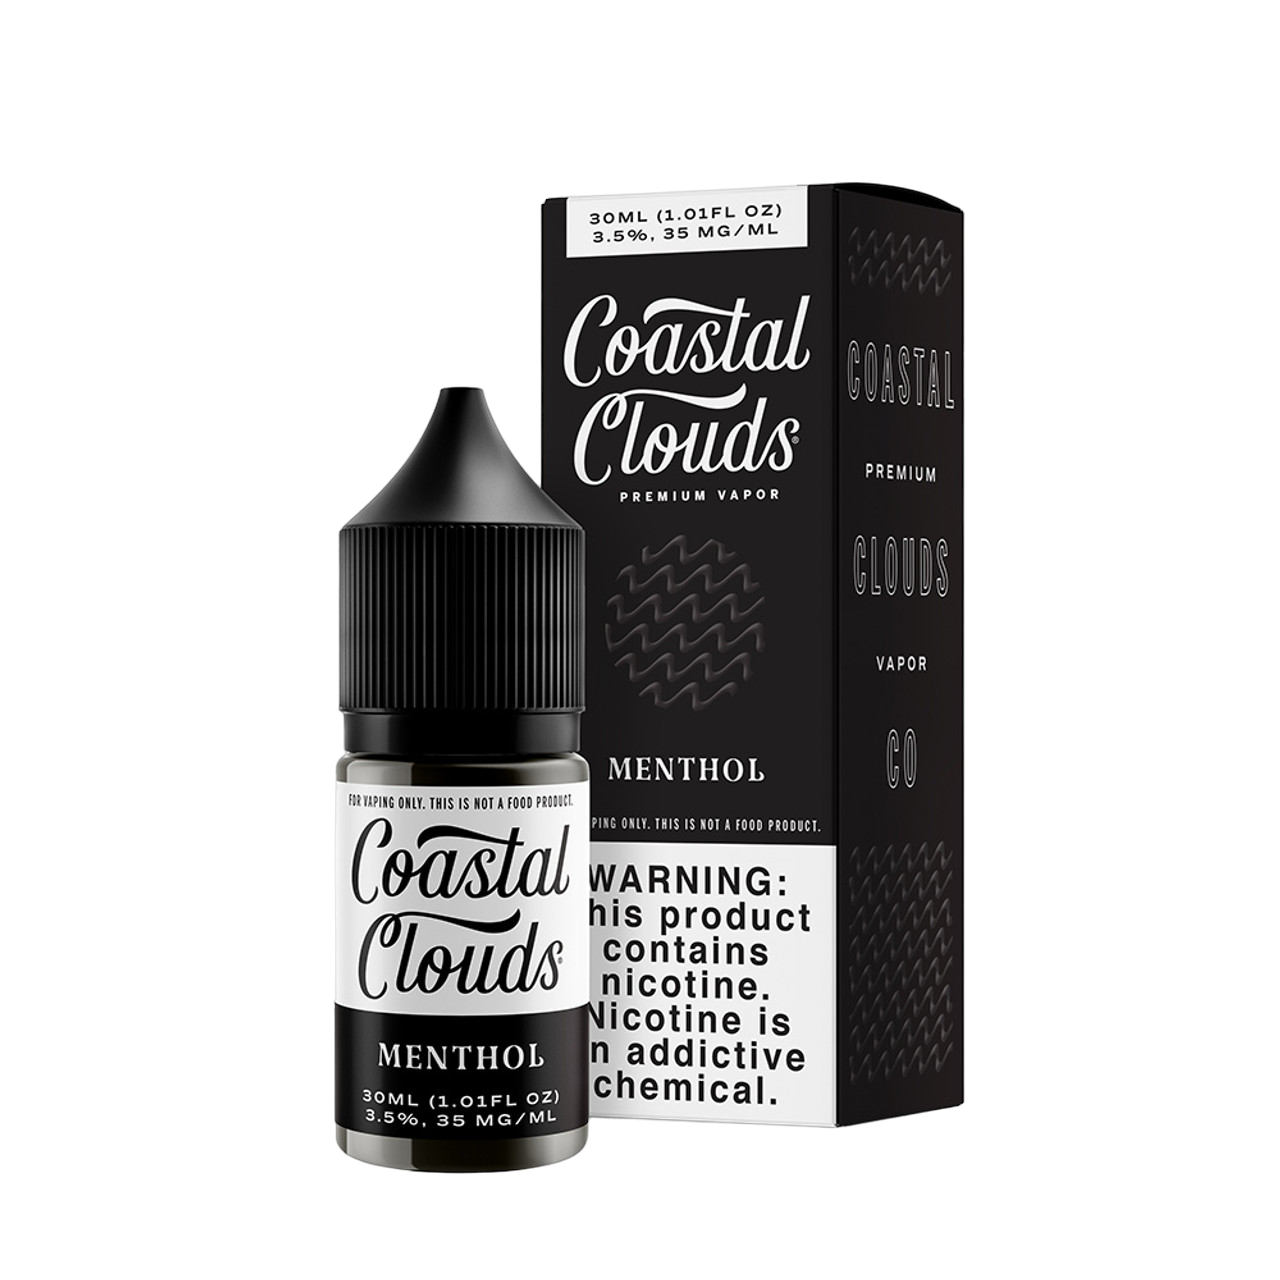 Coastal Clouds Premium Vapor Nicotine Salt E-Liquid 30ML Mint / Menthol